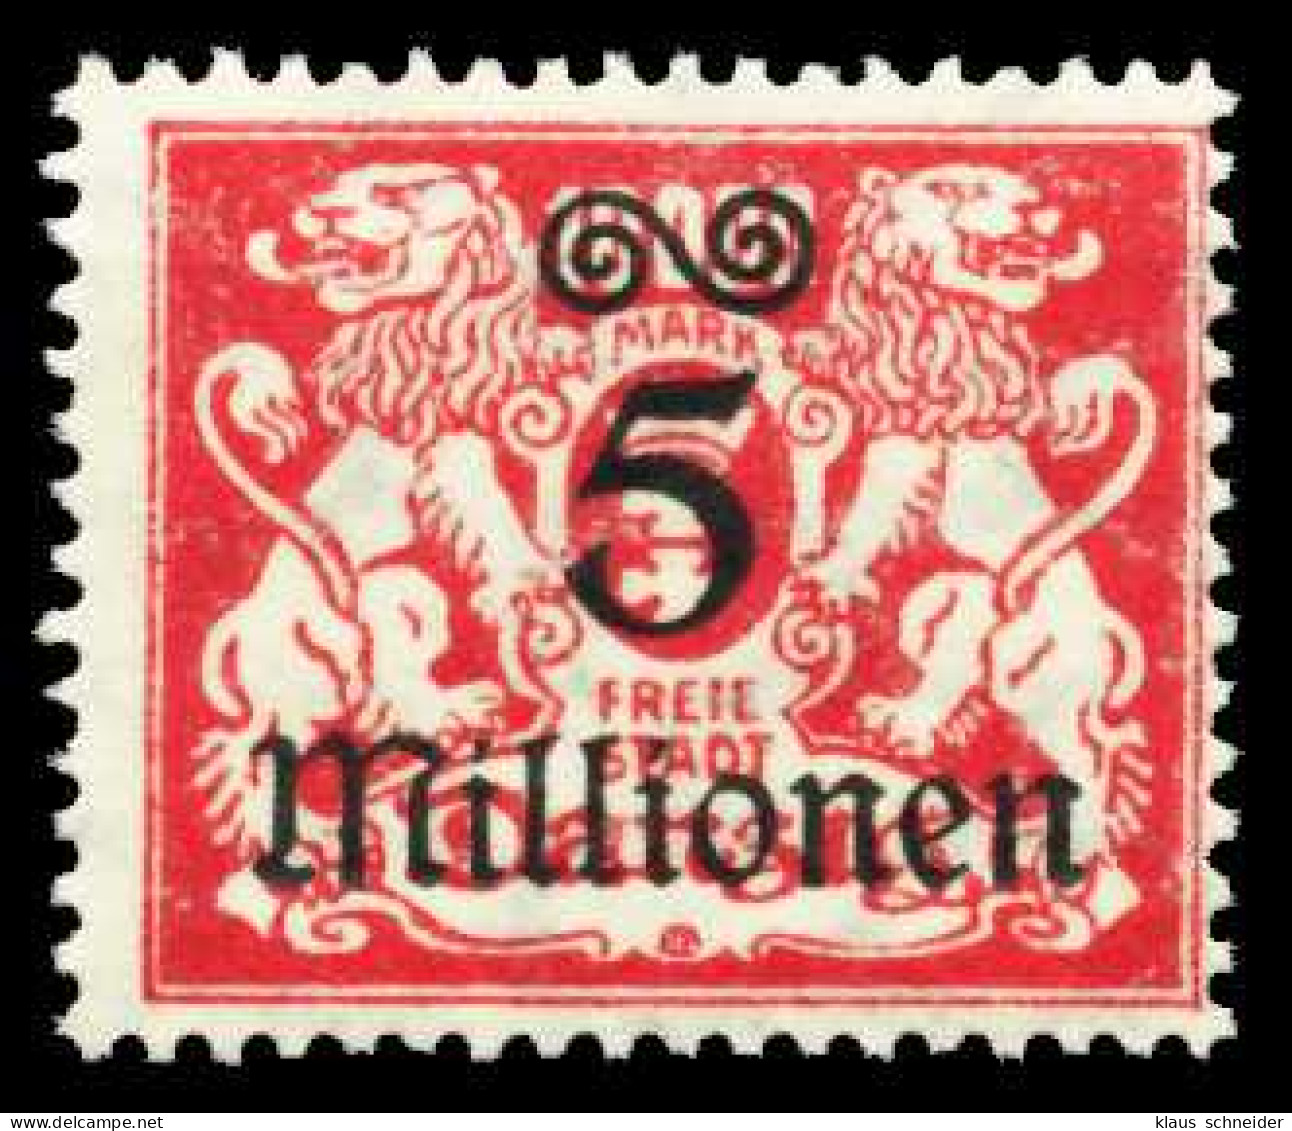 DANZIG 1923 Nr 167 Postfrisch X4CF606 - Mint